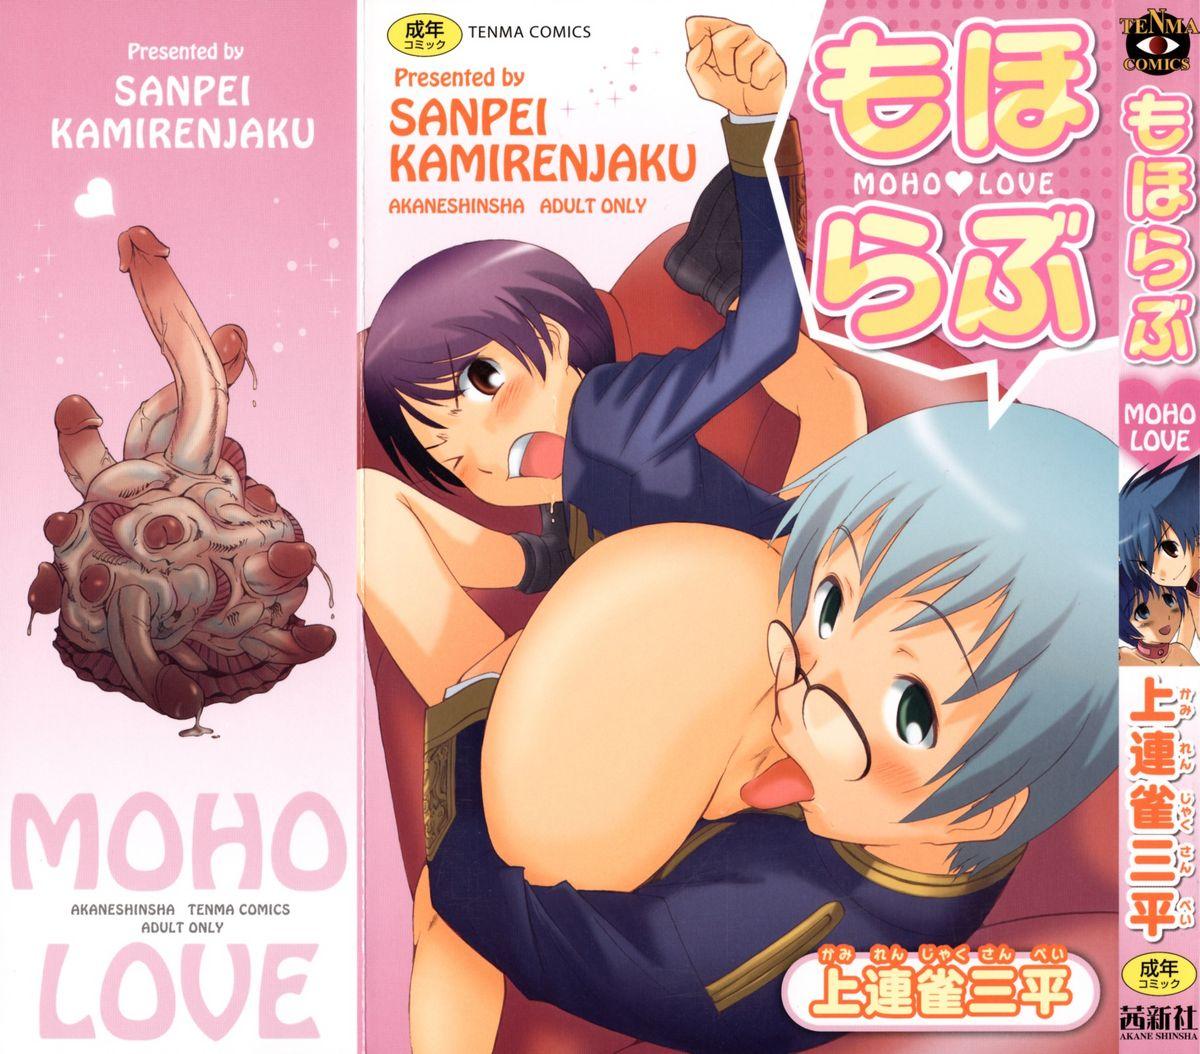 Kamirenjaku Sanpei - Moho Love 0